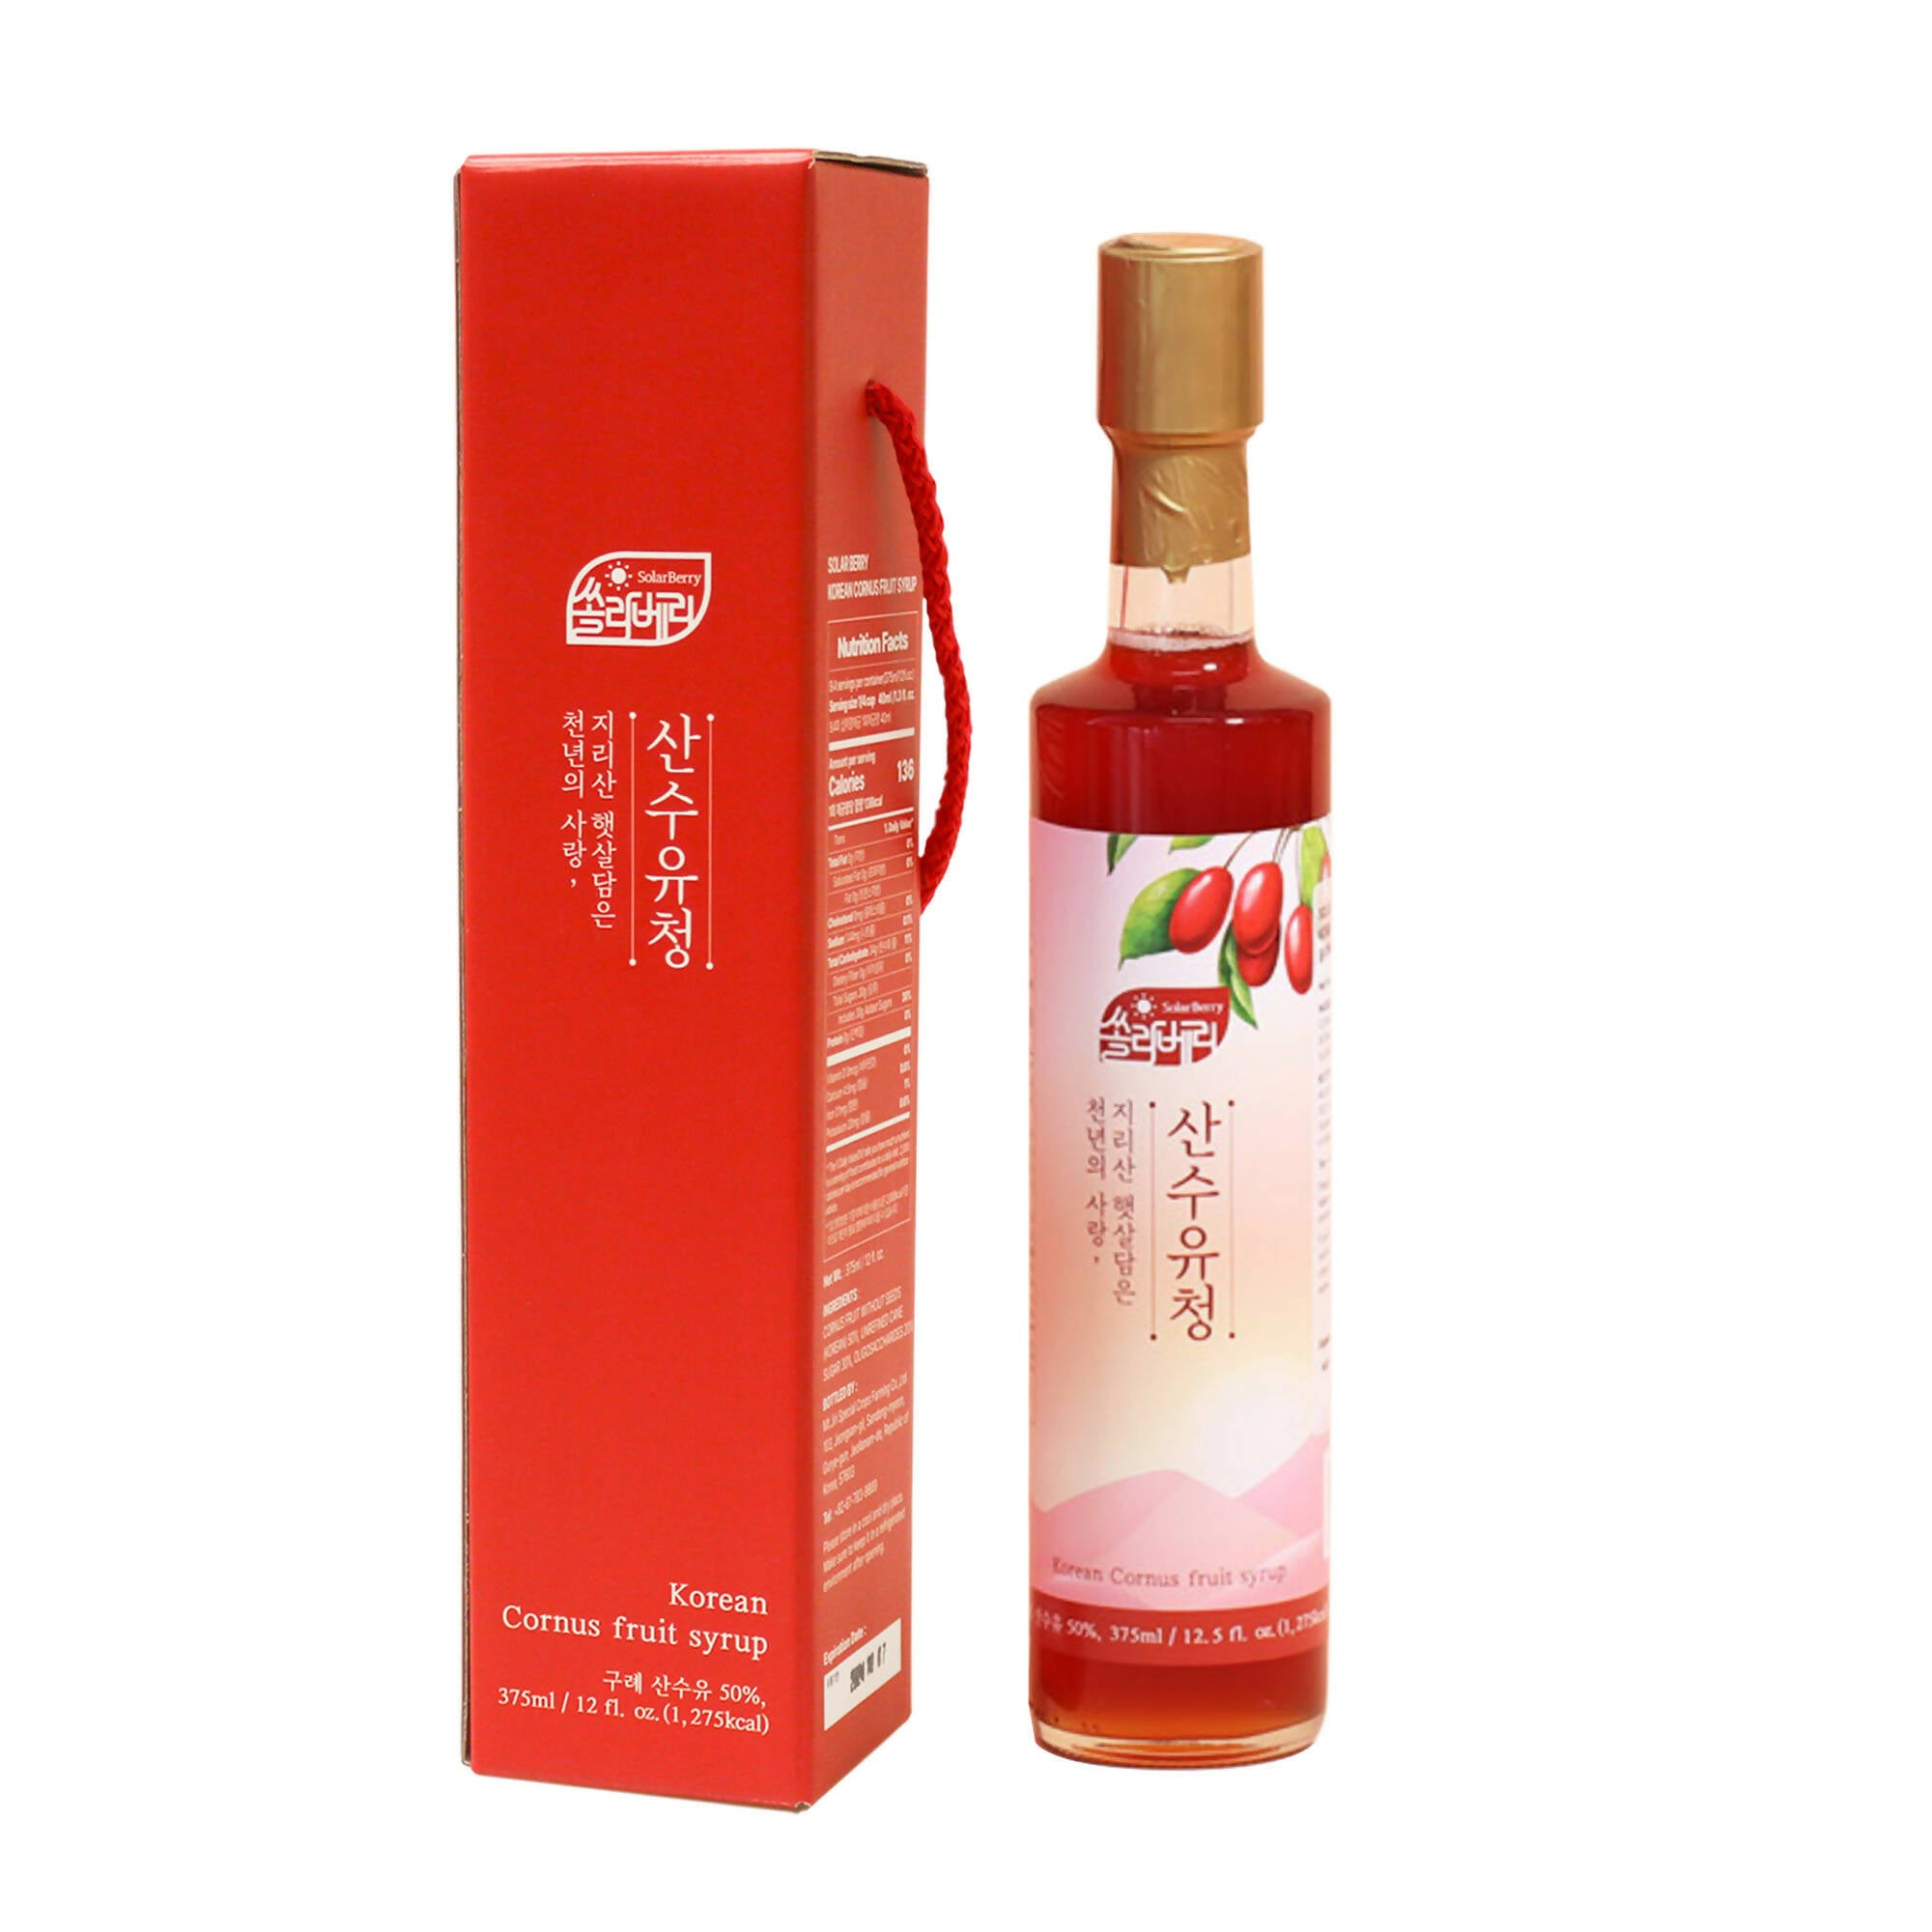 SOLAR BERRY Korean Cornus Fruit Syrup - [쏠라베리] 우리가족 건강음표 산수유청 선물용 375ml